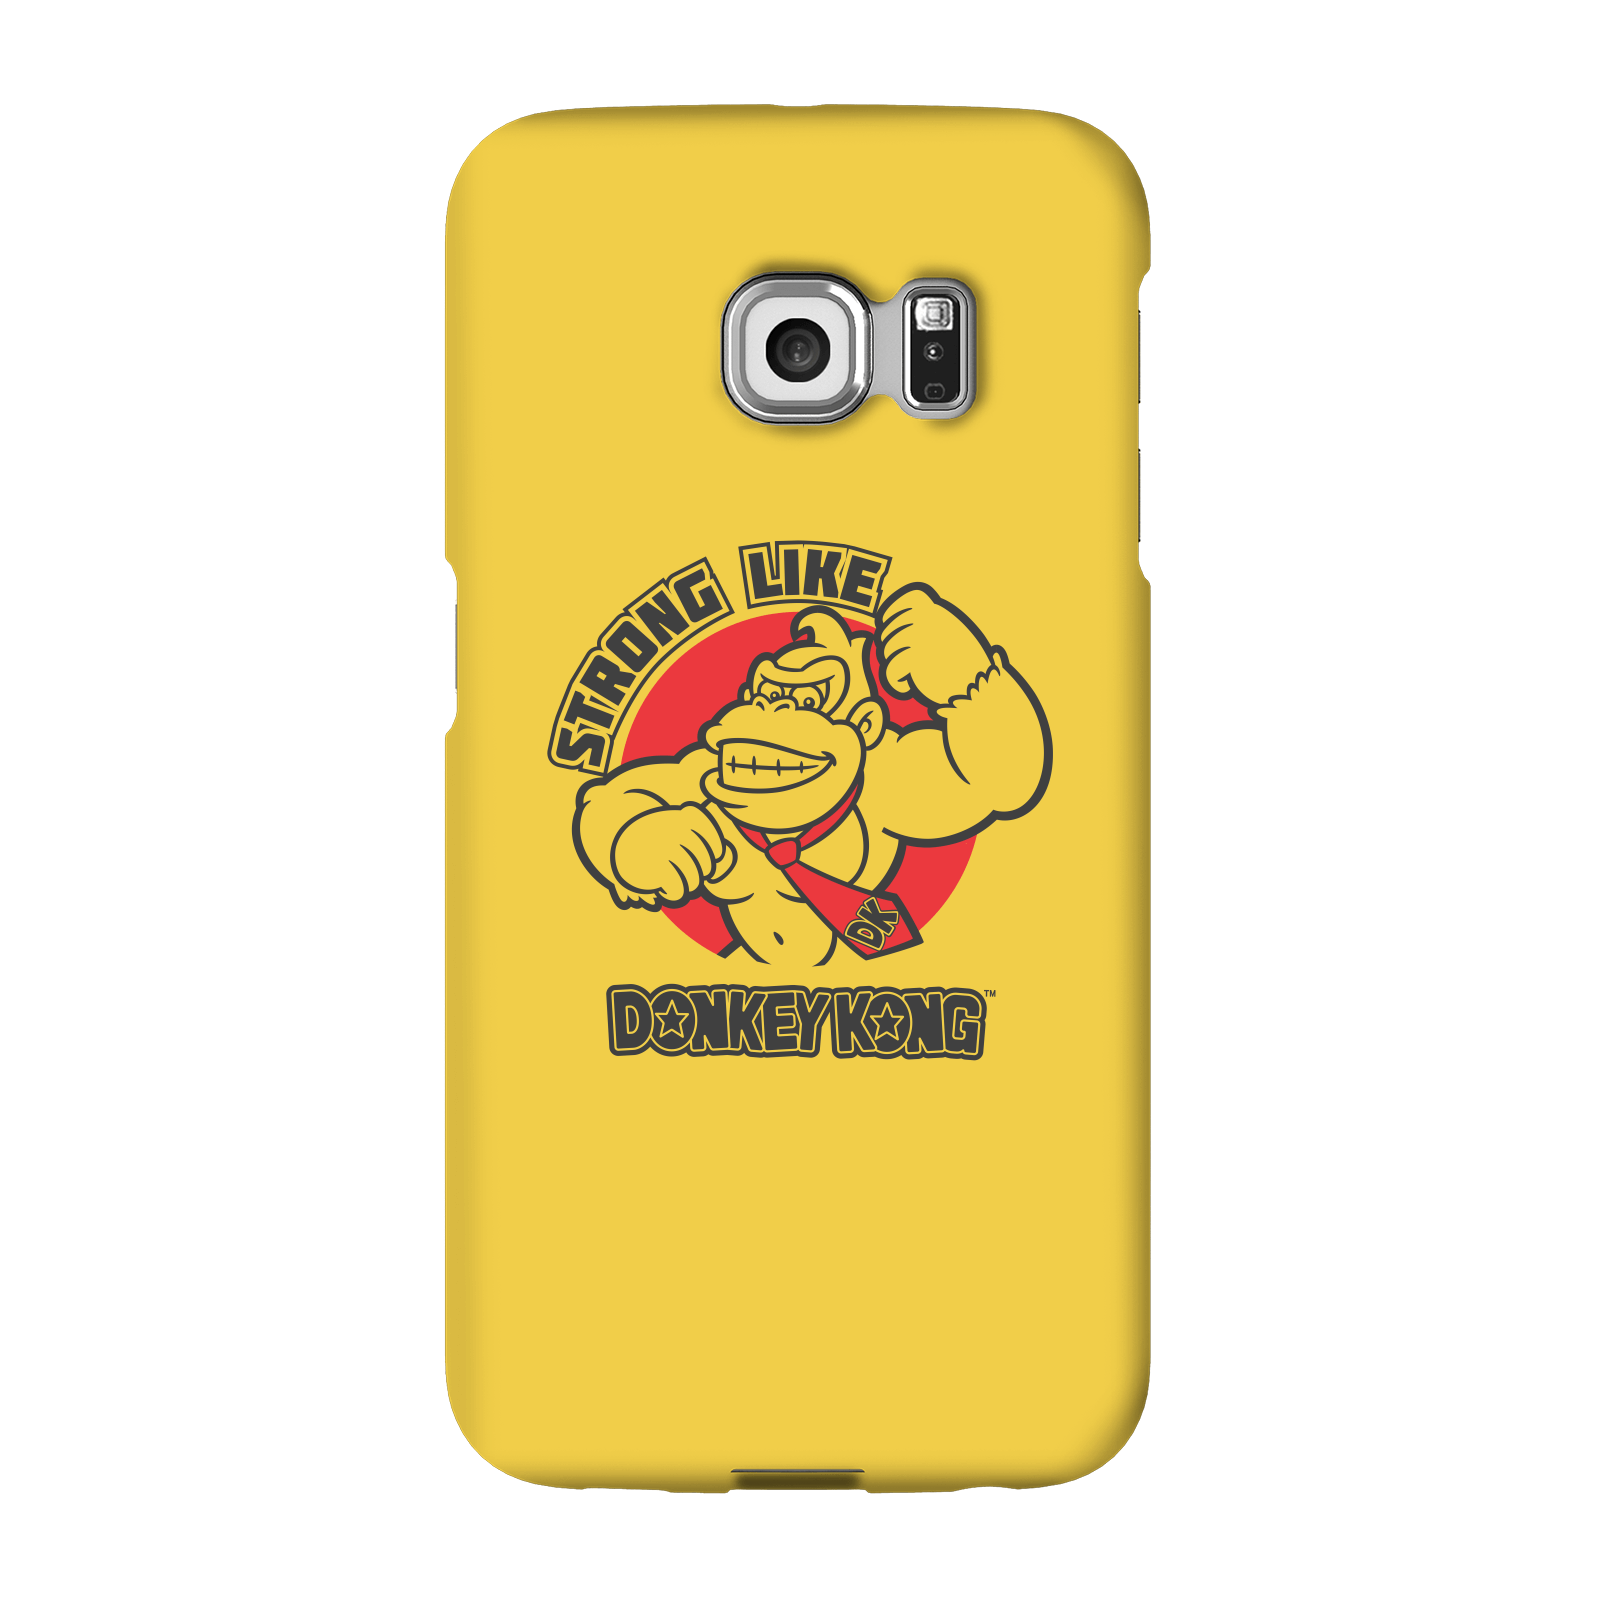 Nintendo Donkey Kong Strong Like Donkey Kong Phone Case - Samsung S6 Edge - Snap Case - Gloss